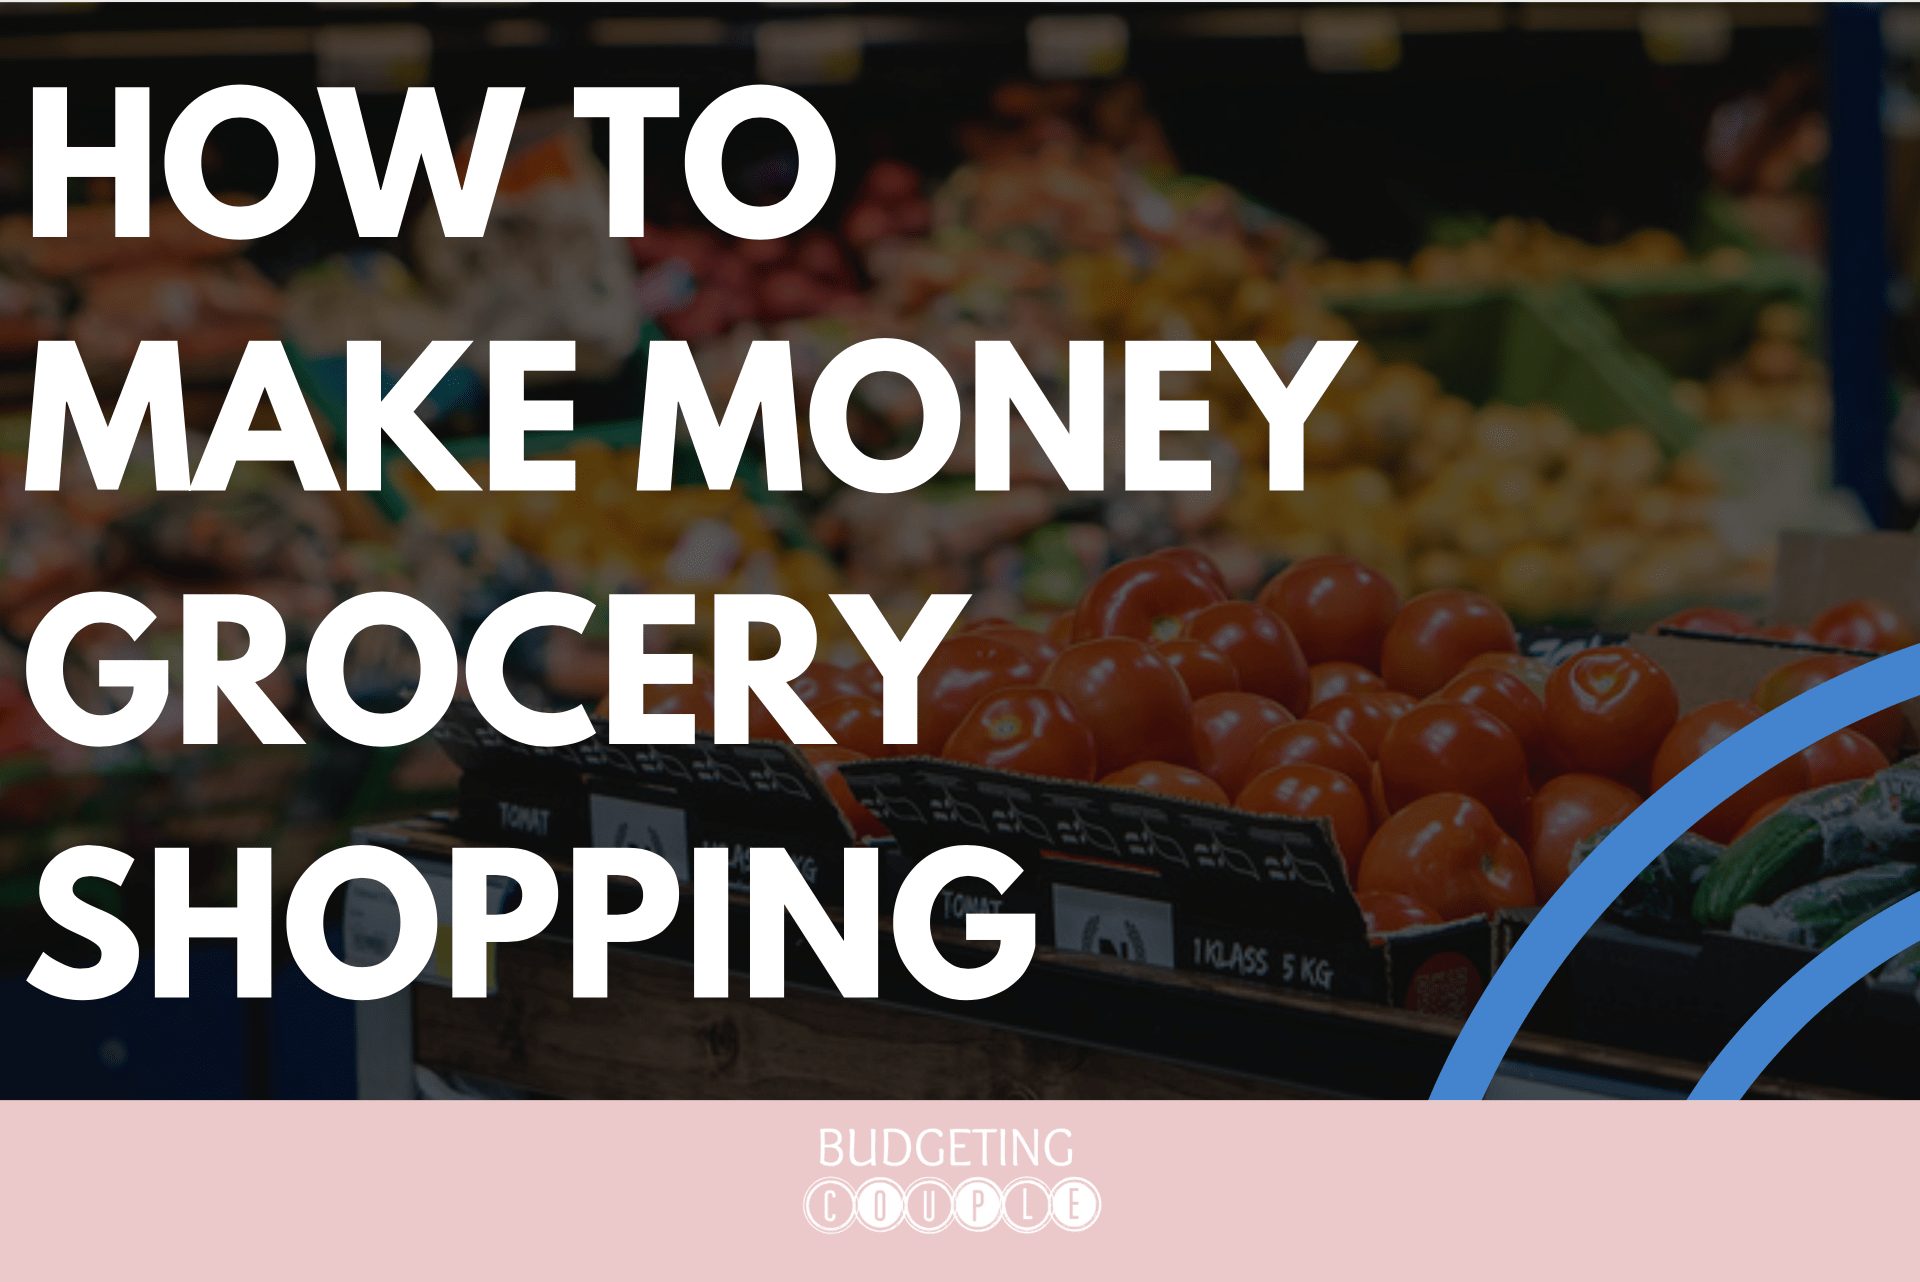 make money, cash back, save money, how to make money grocery shopping, money saving tips, save money, frugal living, living frugal